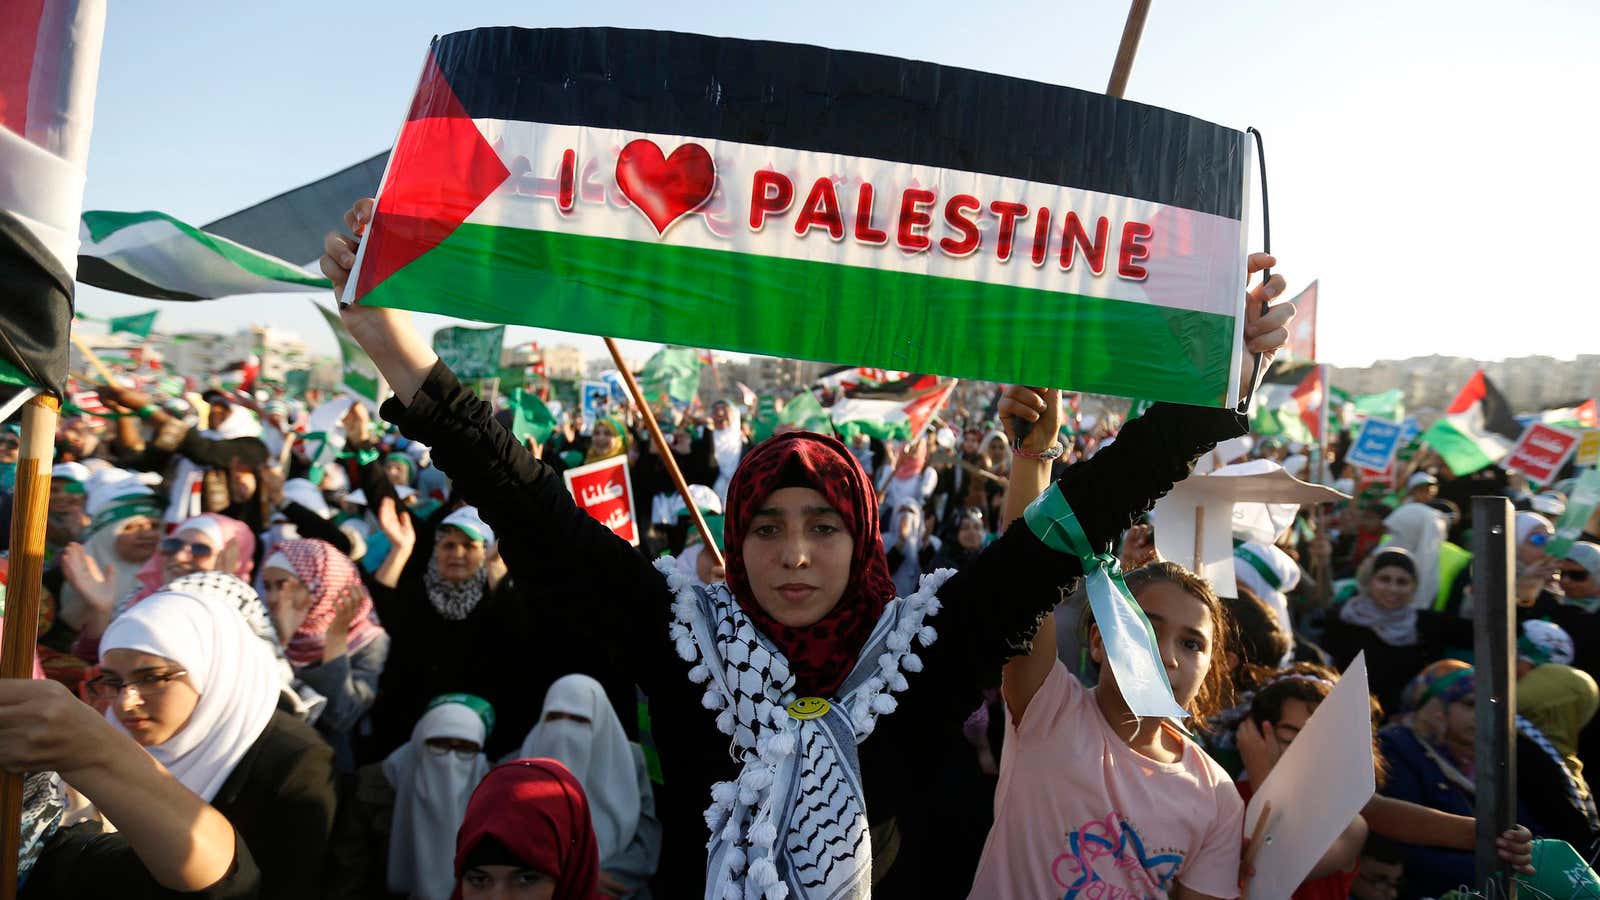 Around 70% of the UN recognizes Palestine now.